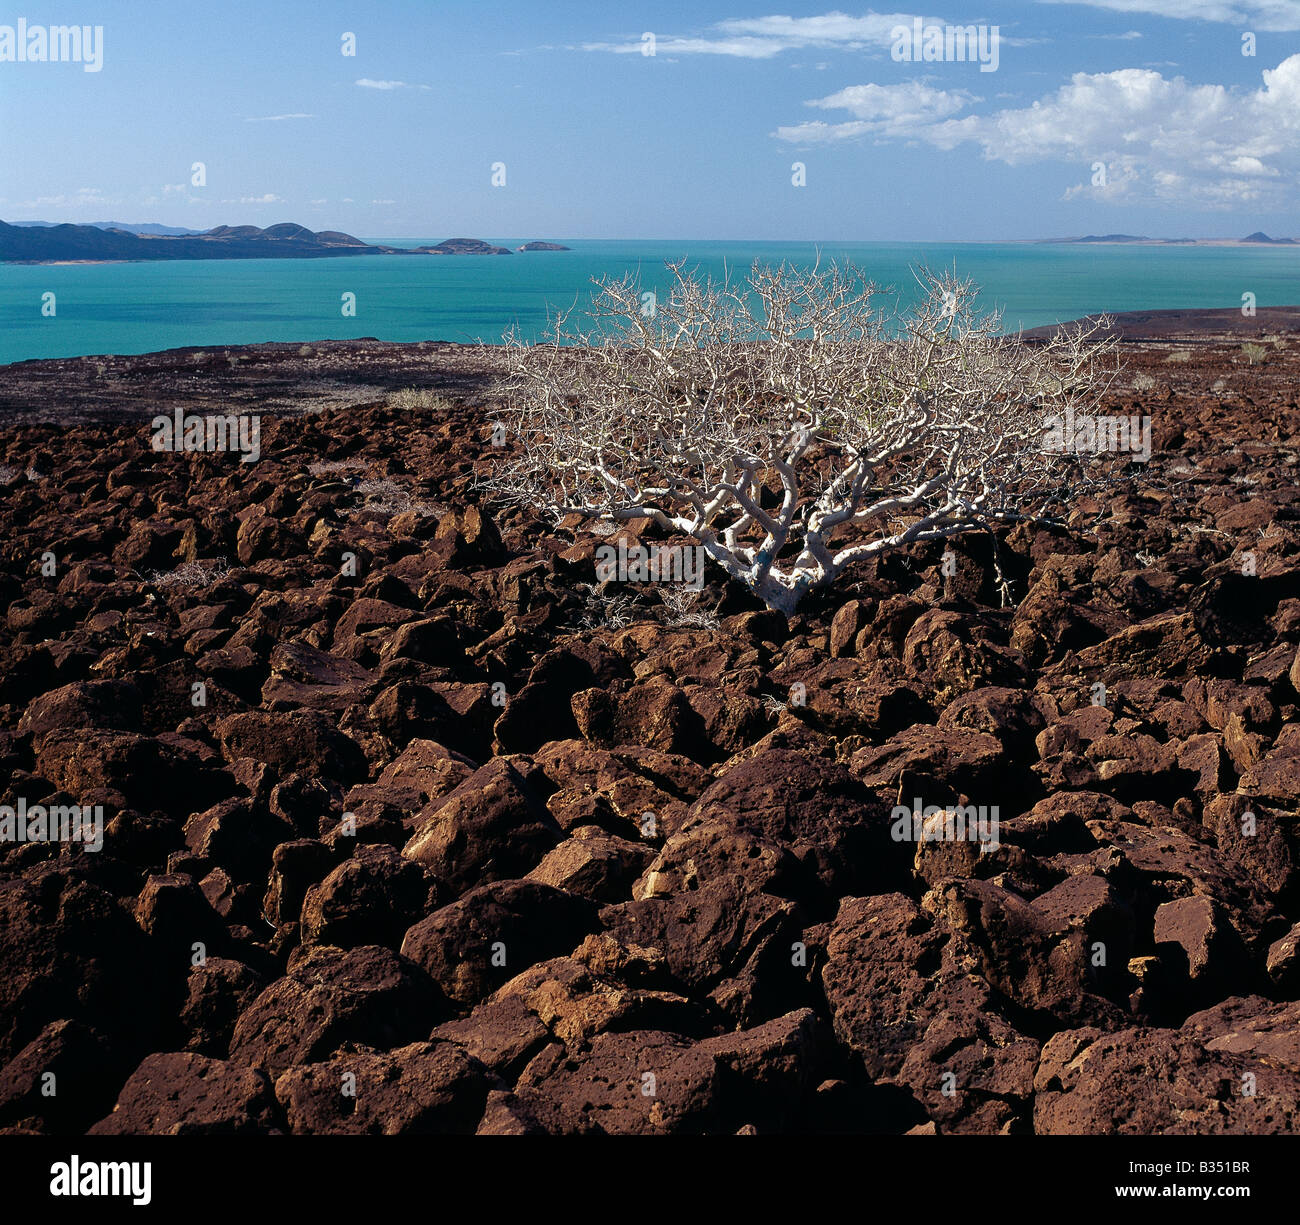 Kenya, Lake Turkana, SE Lake Turkana. A commiphora  tree struggles to survive among basalt boulders. Stock Photo